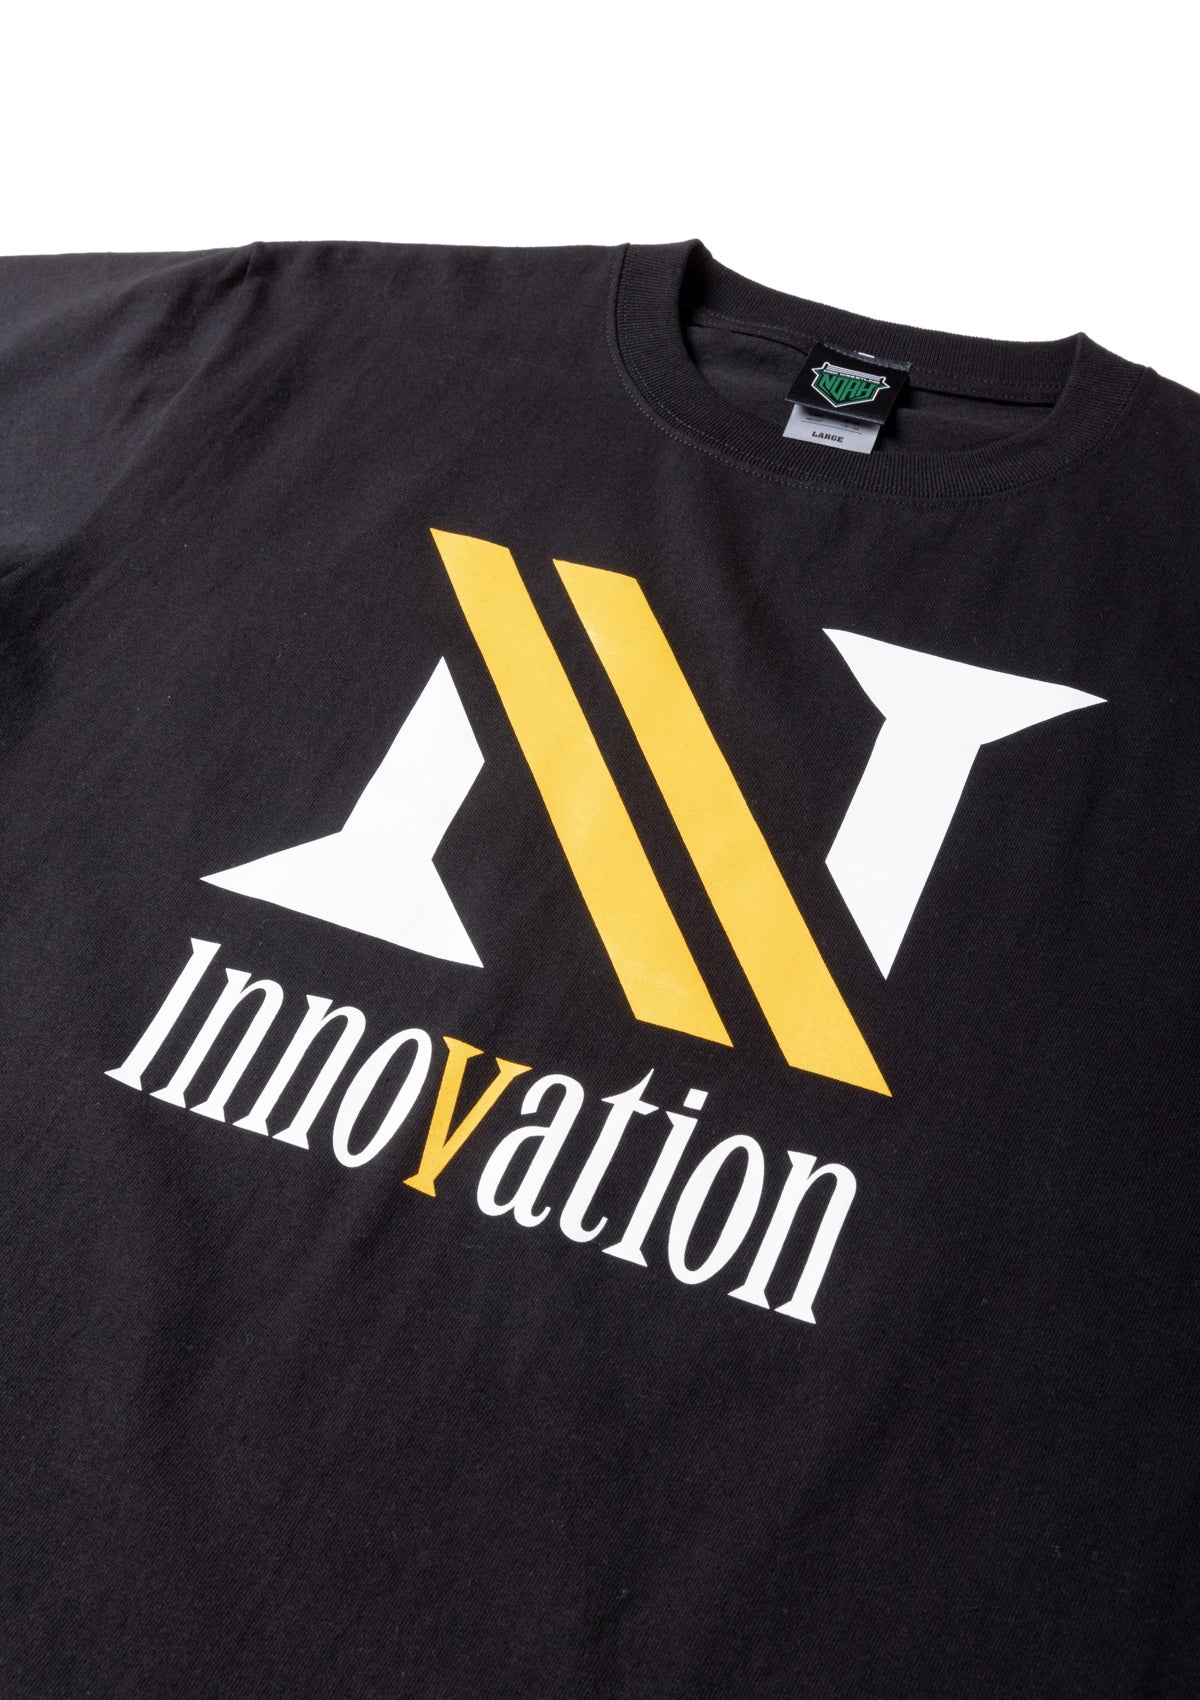 N InnovationTシャツ